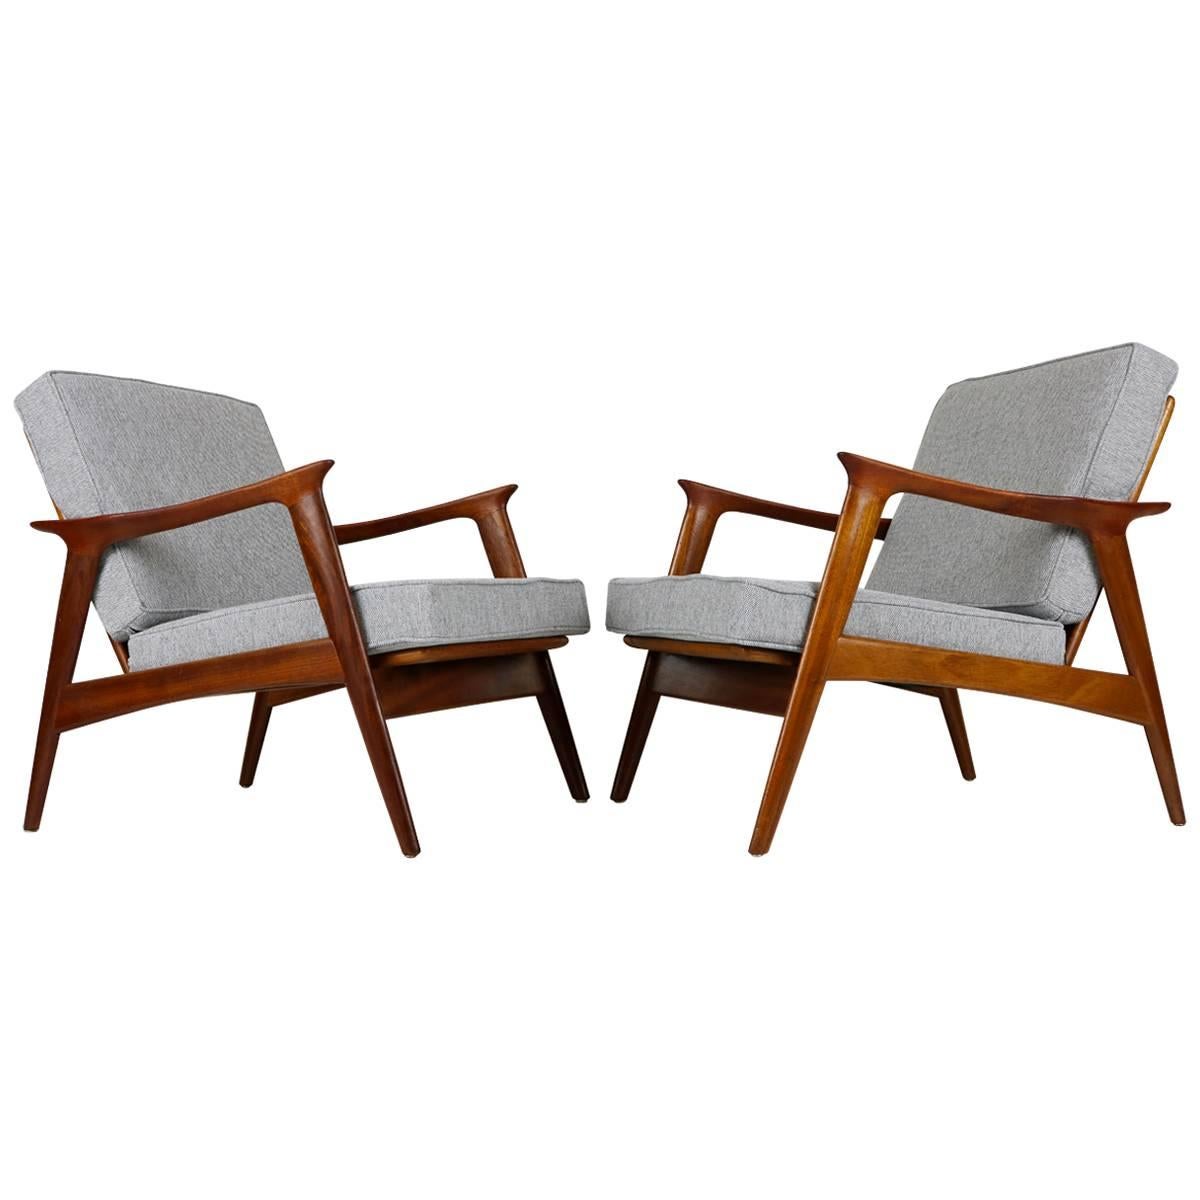 Set of Two Norwegian Midcentury Design Lounge Chairs by Fredrik Kayser, 1950